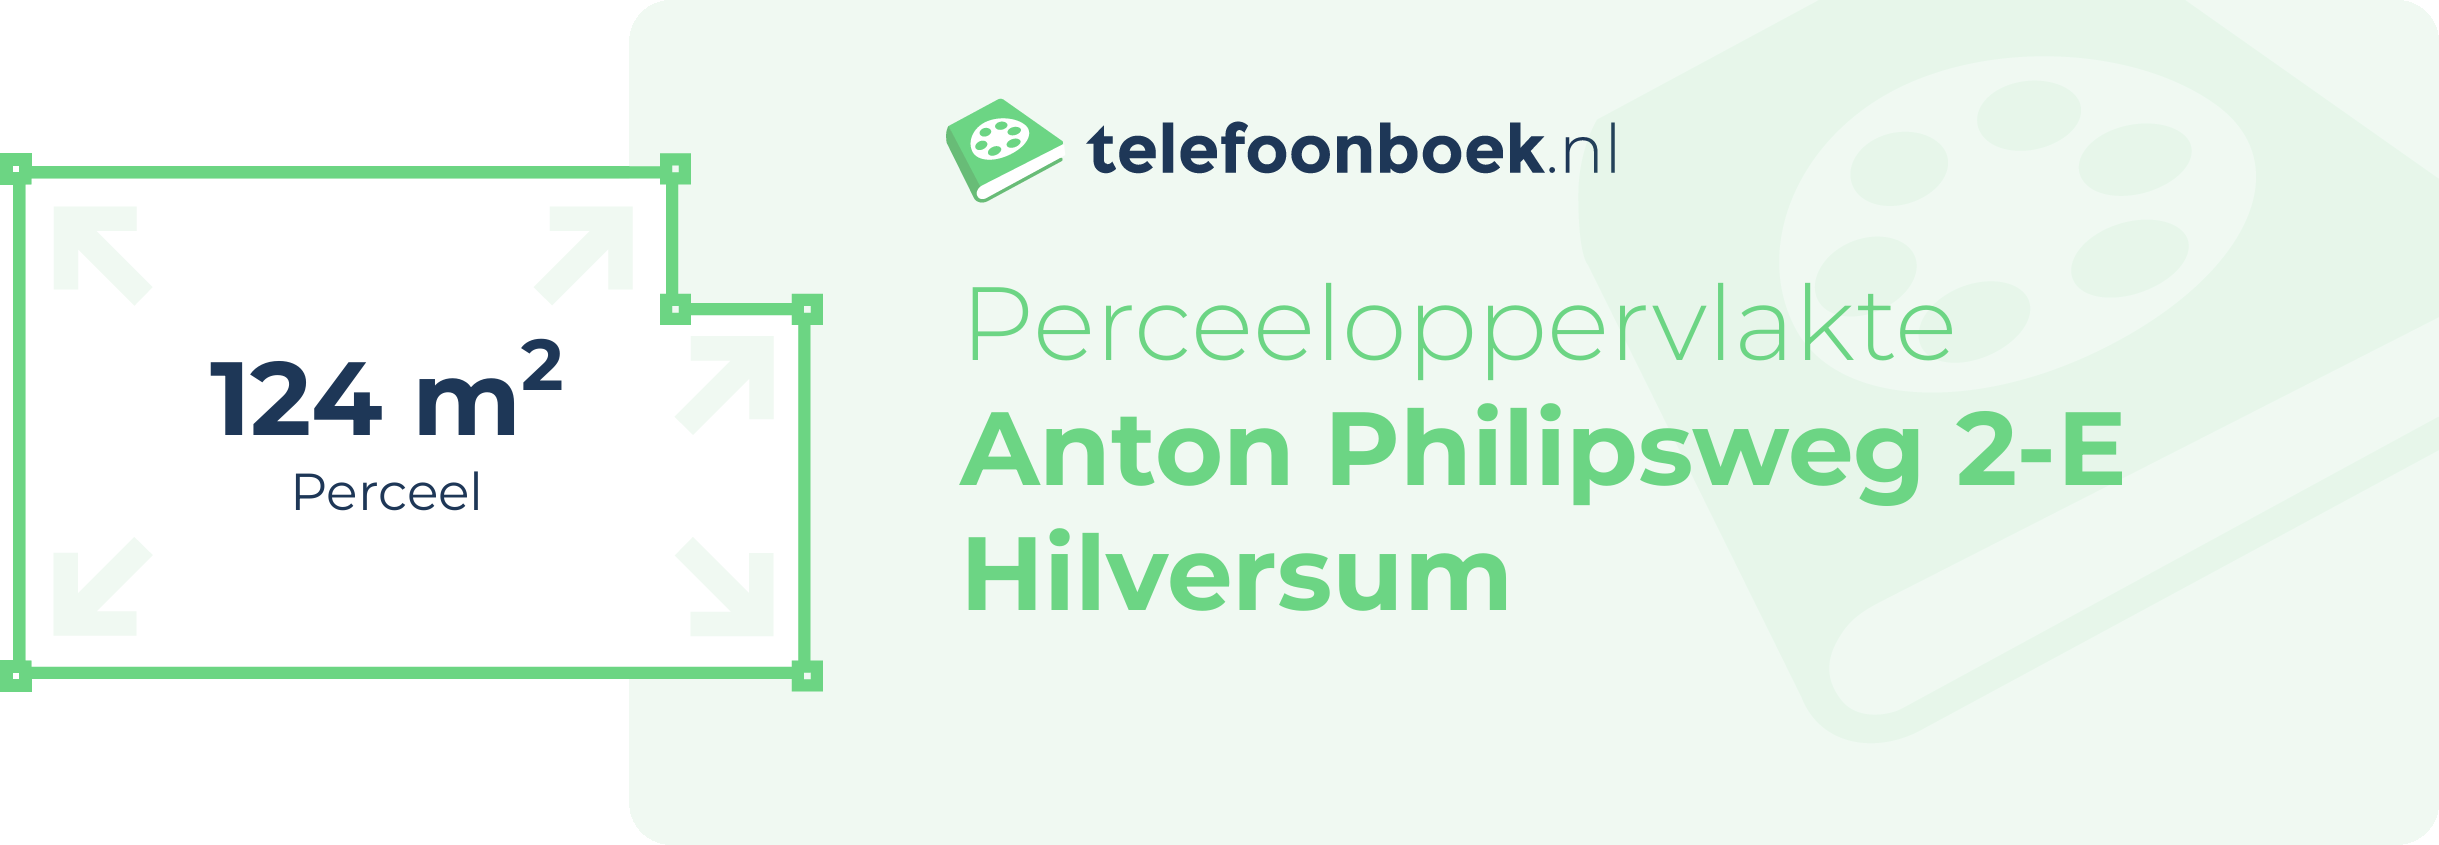 Perceeloppervlakte Anton Philipsweg 2-E Hilversum